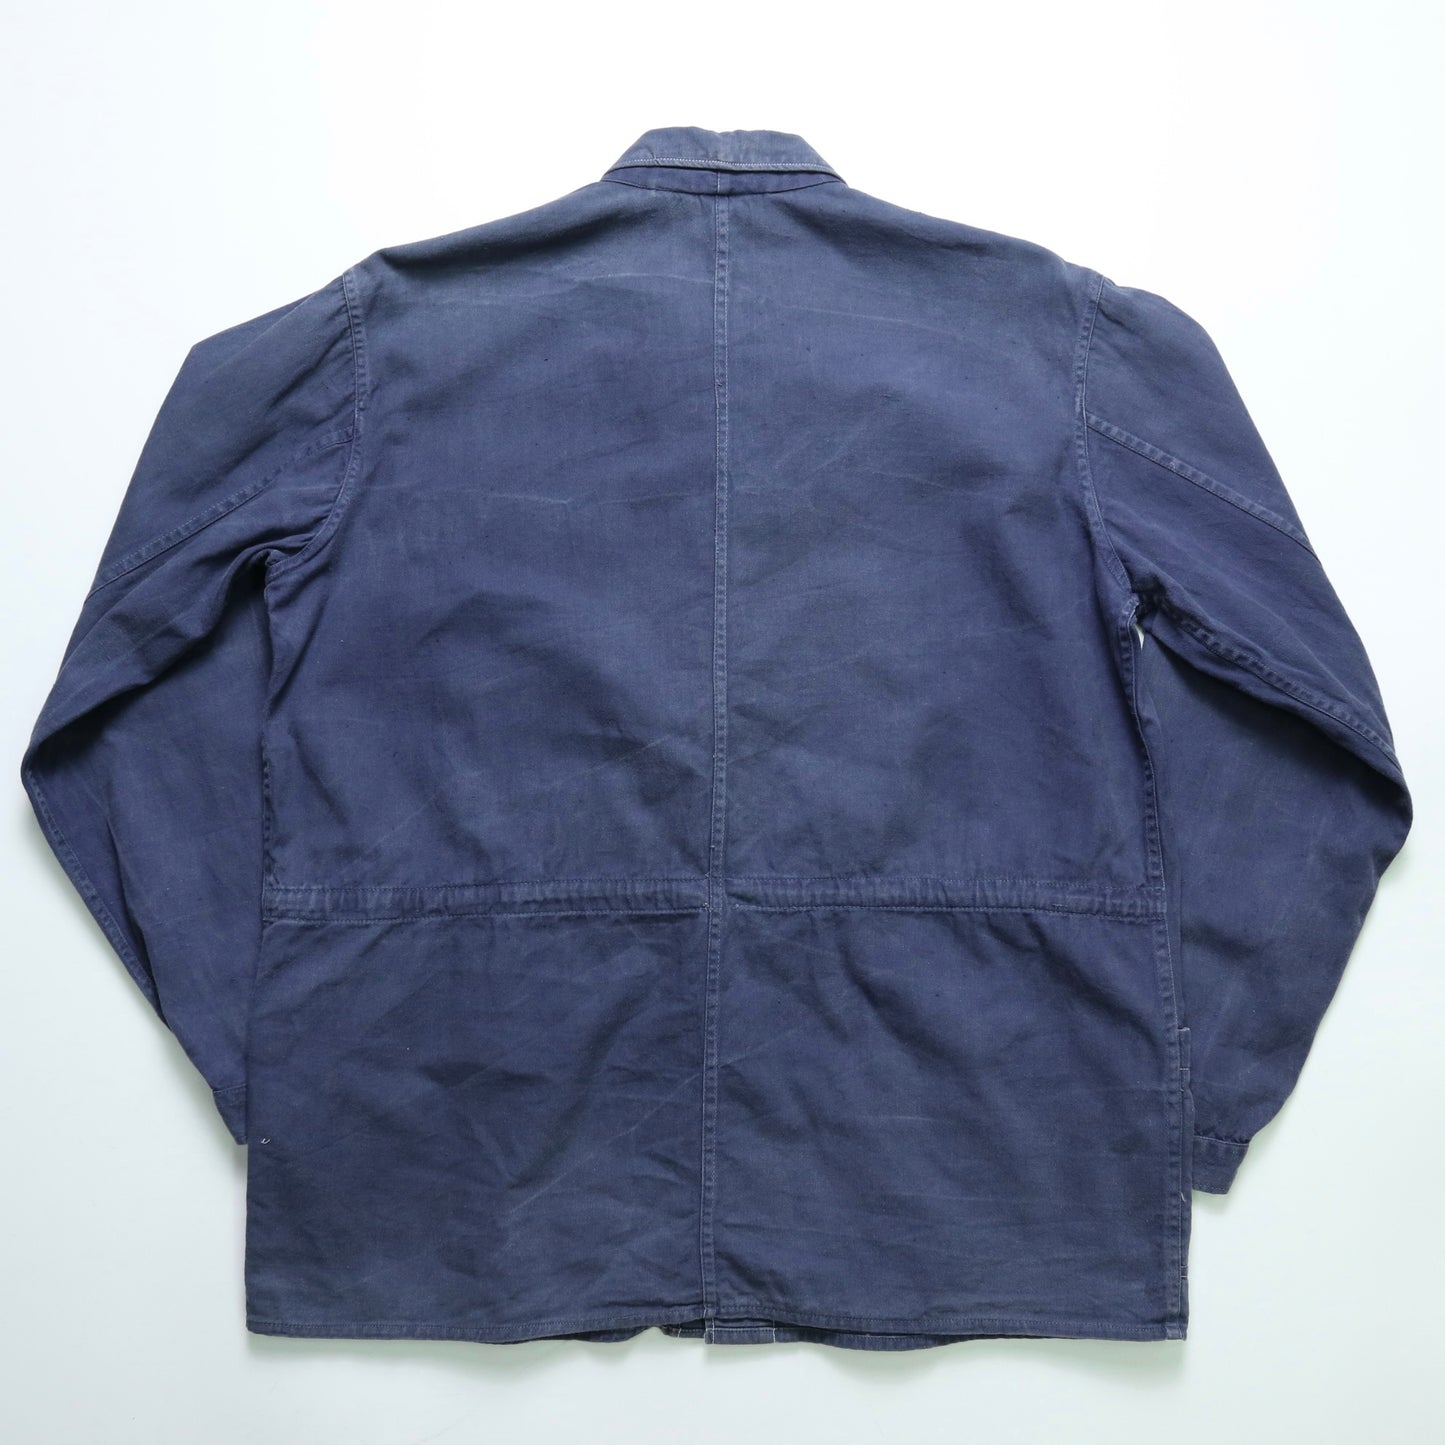 1980s Lotus blue French work jacket